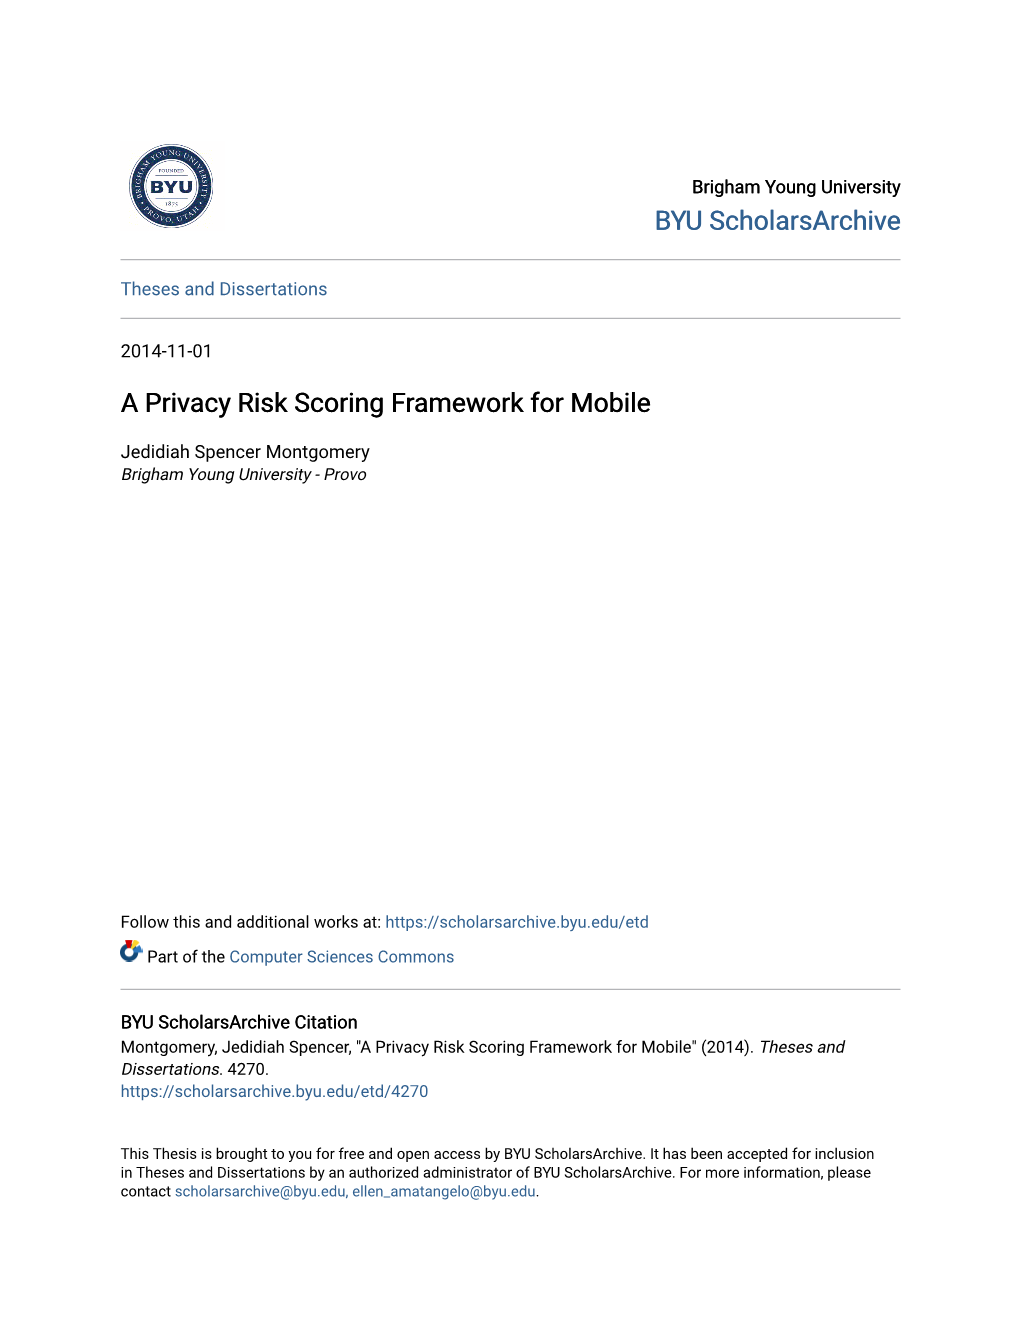 A Privacy Risk Scoring Framework for Mobile